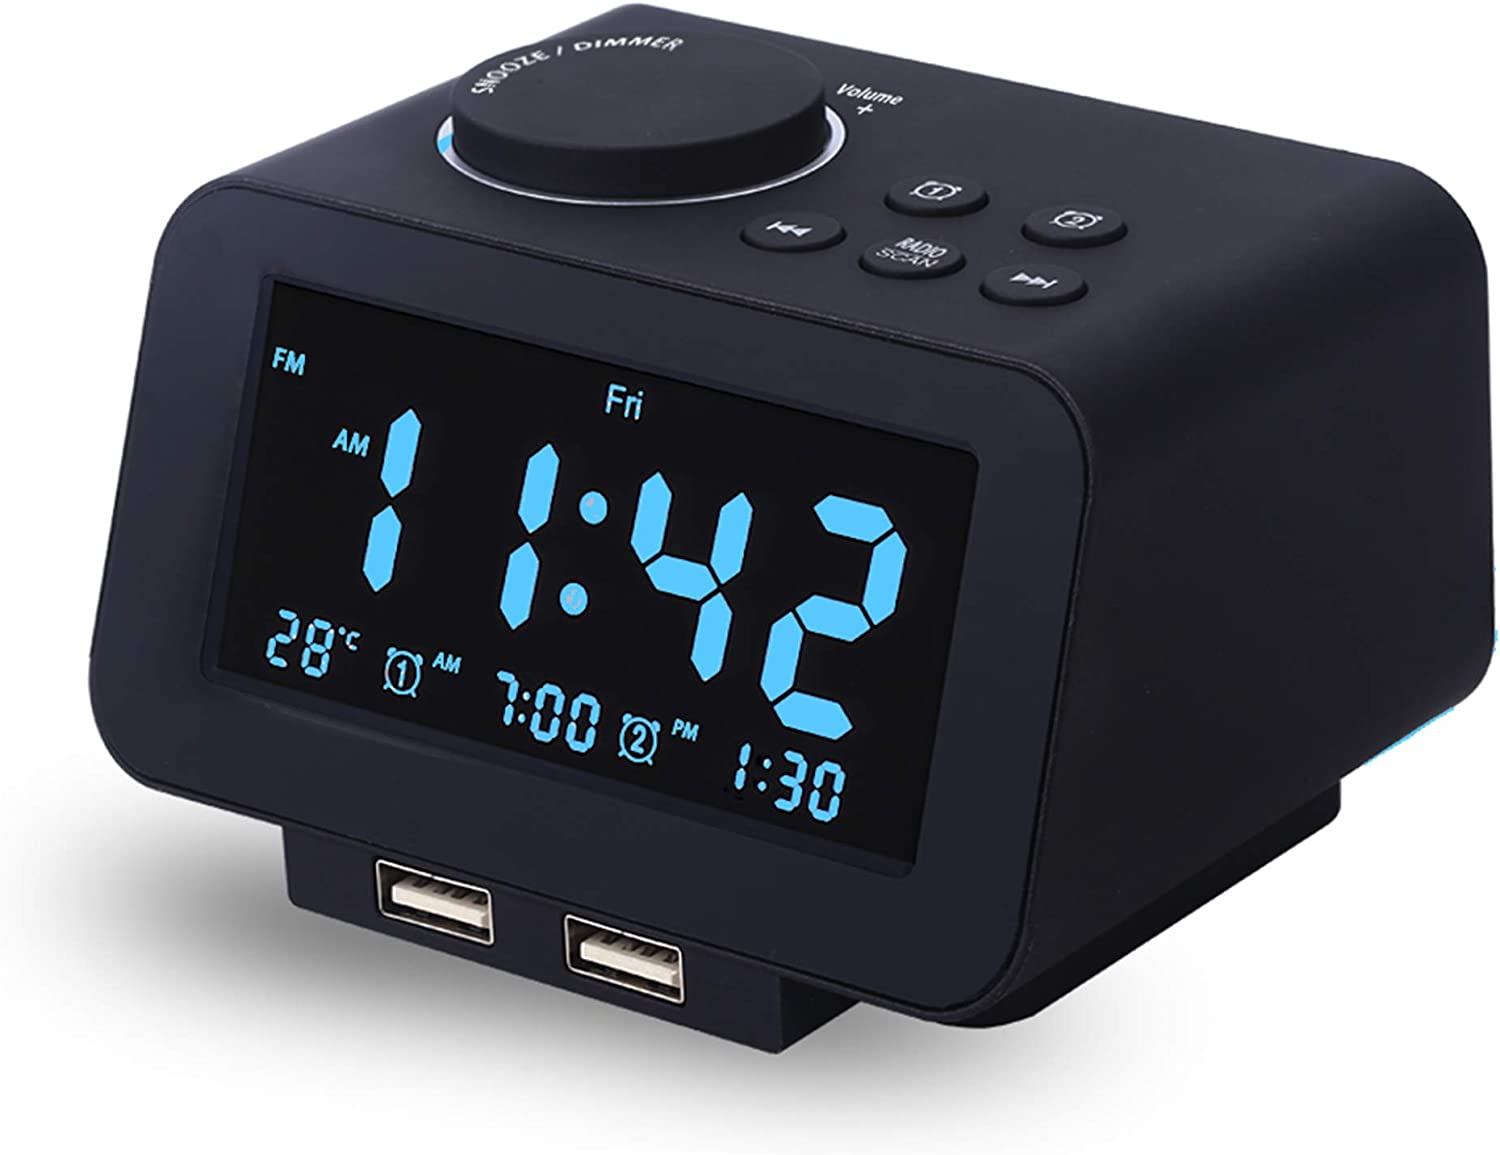 Emerson SmartSet LED Alarm Clock Radio